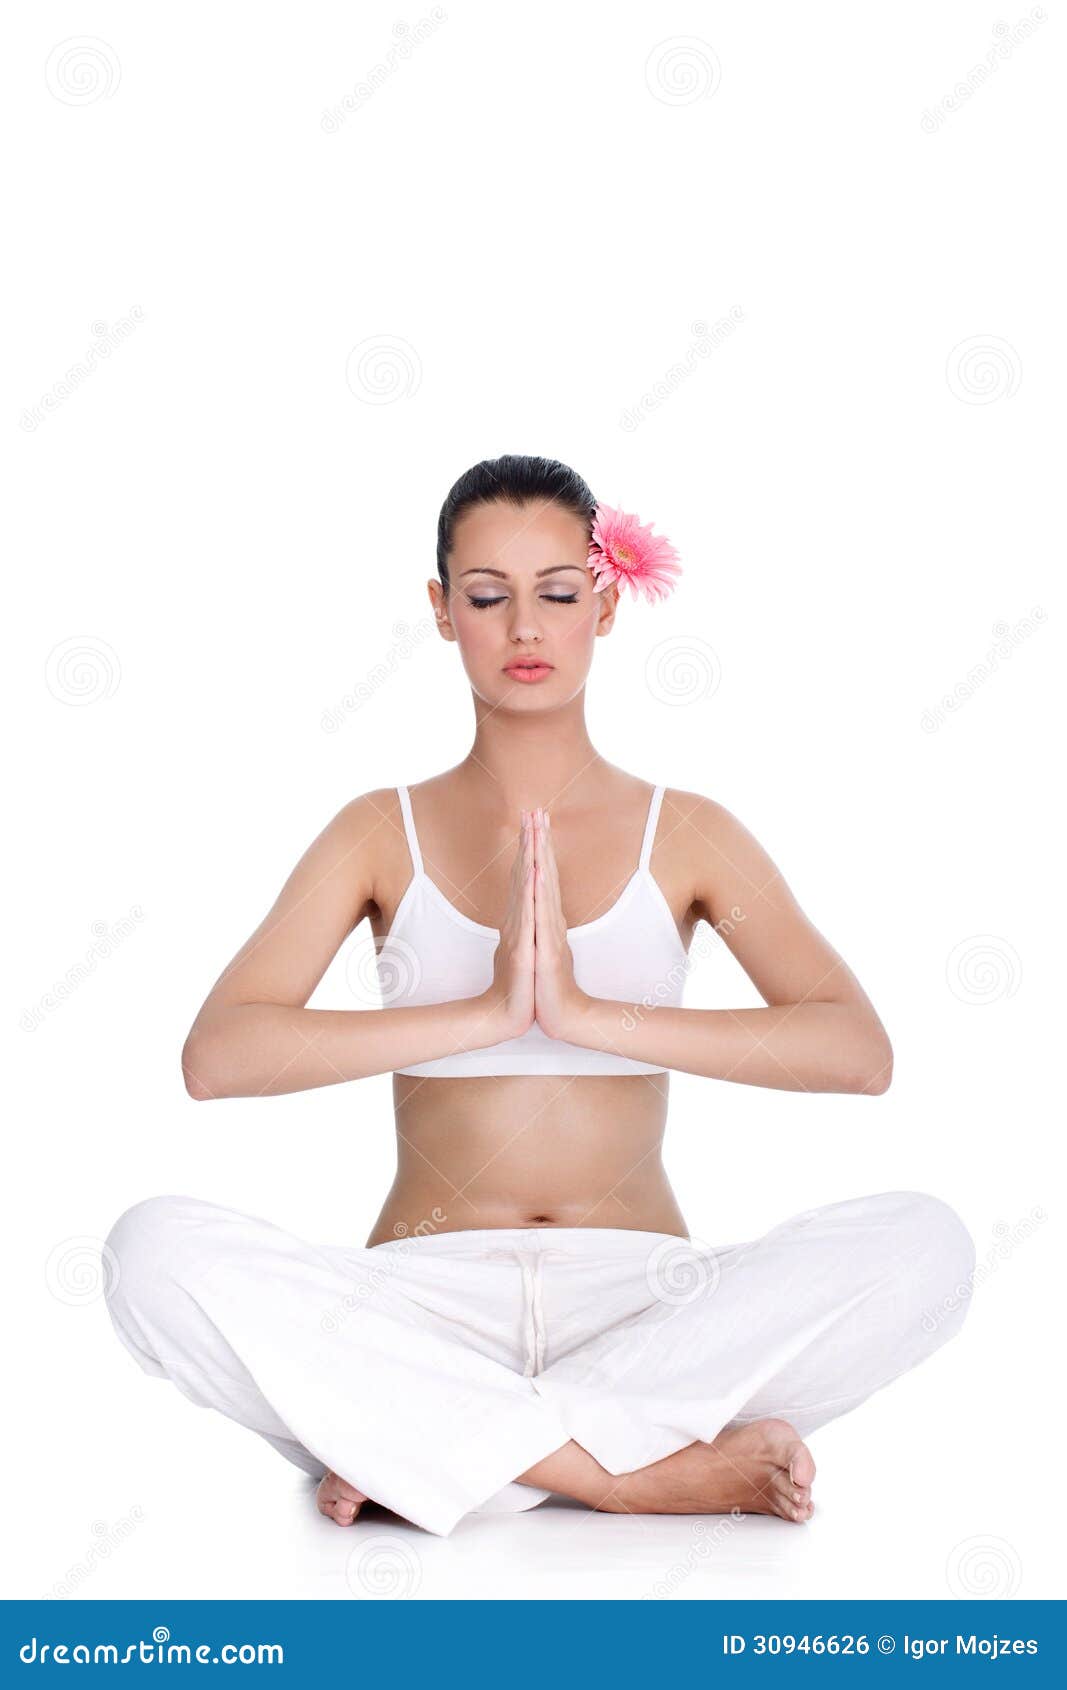 tranquil woman meditating